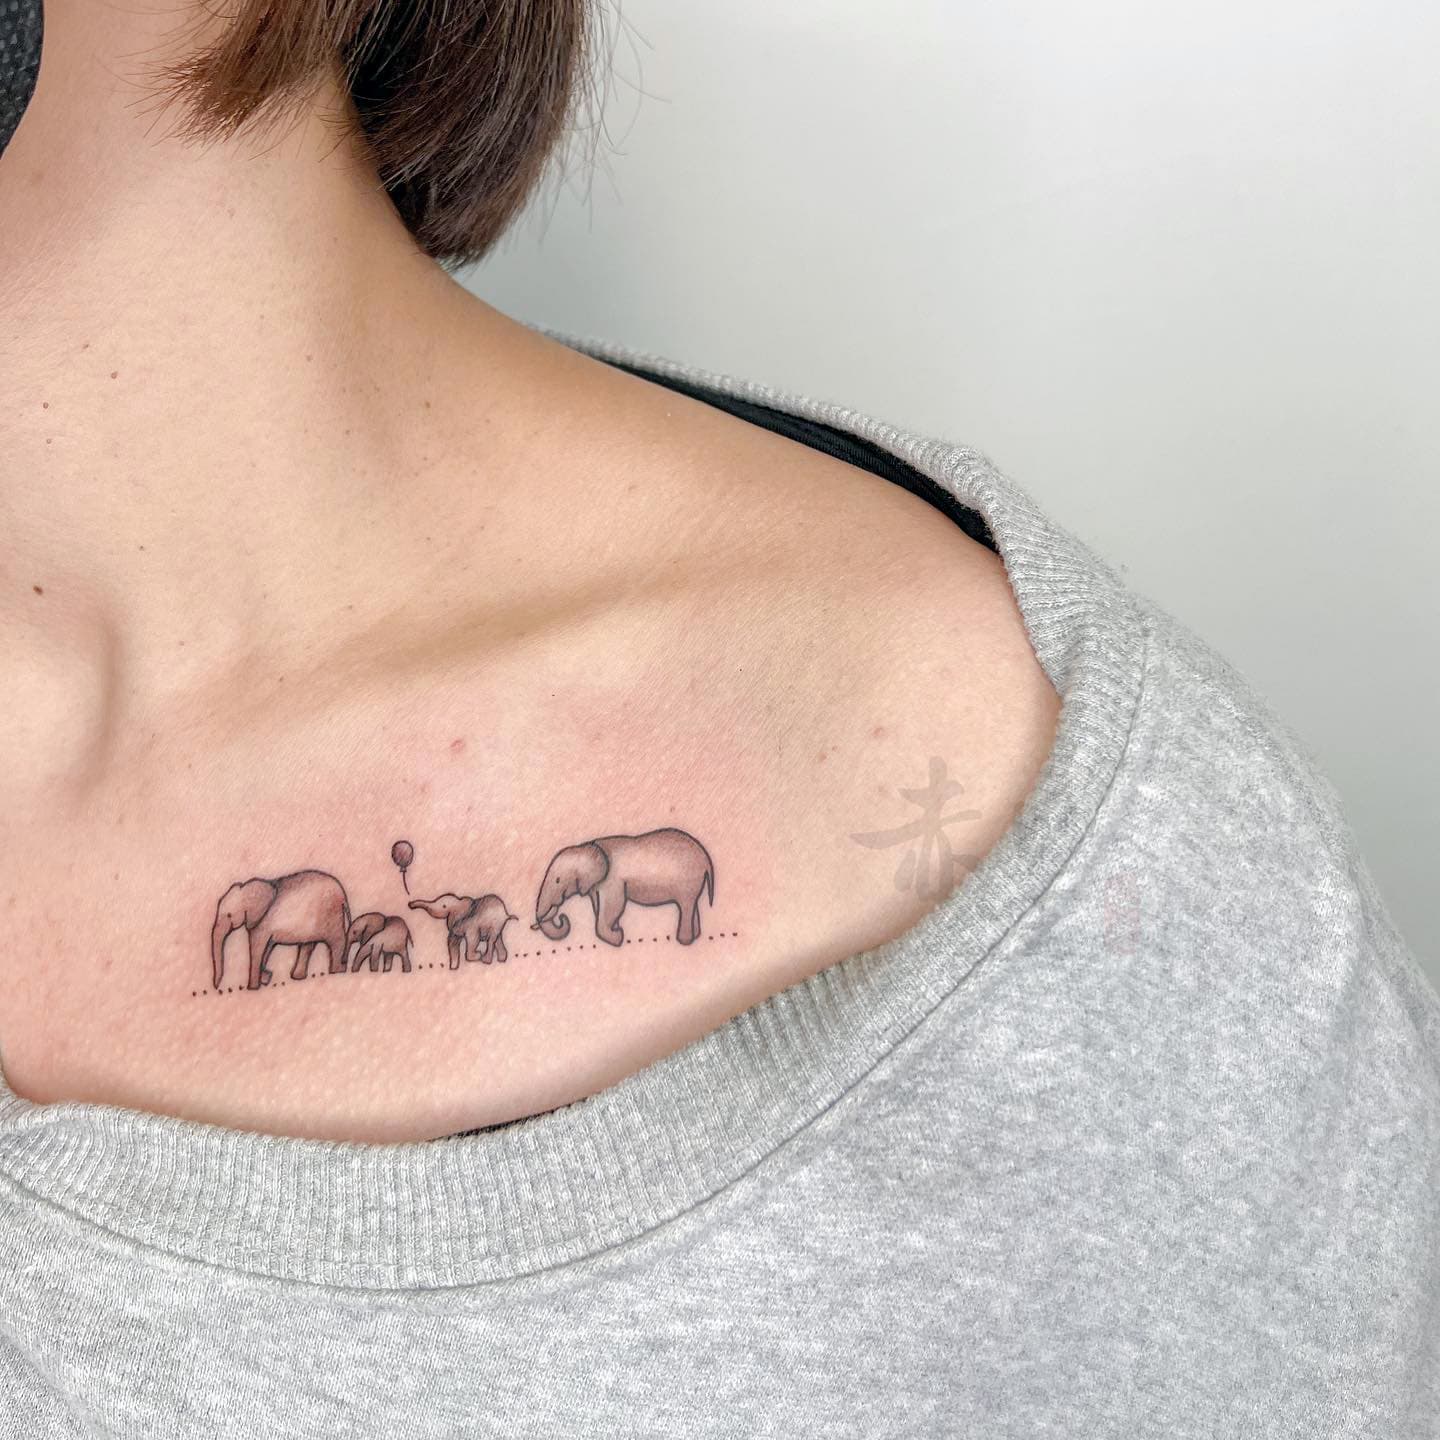 Tatuaje inspirado en la madre de tres niños